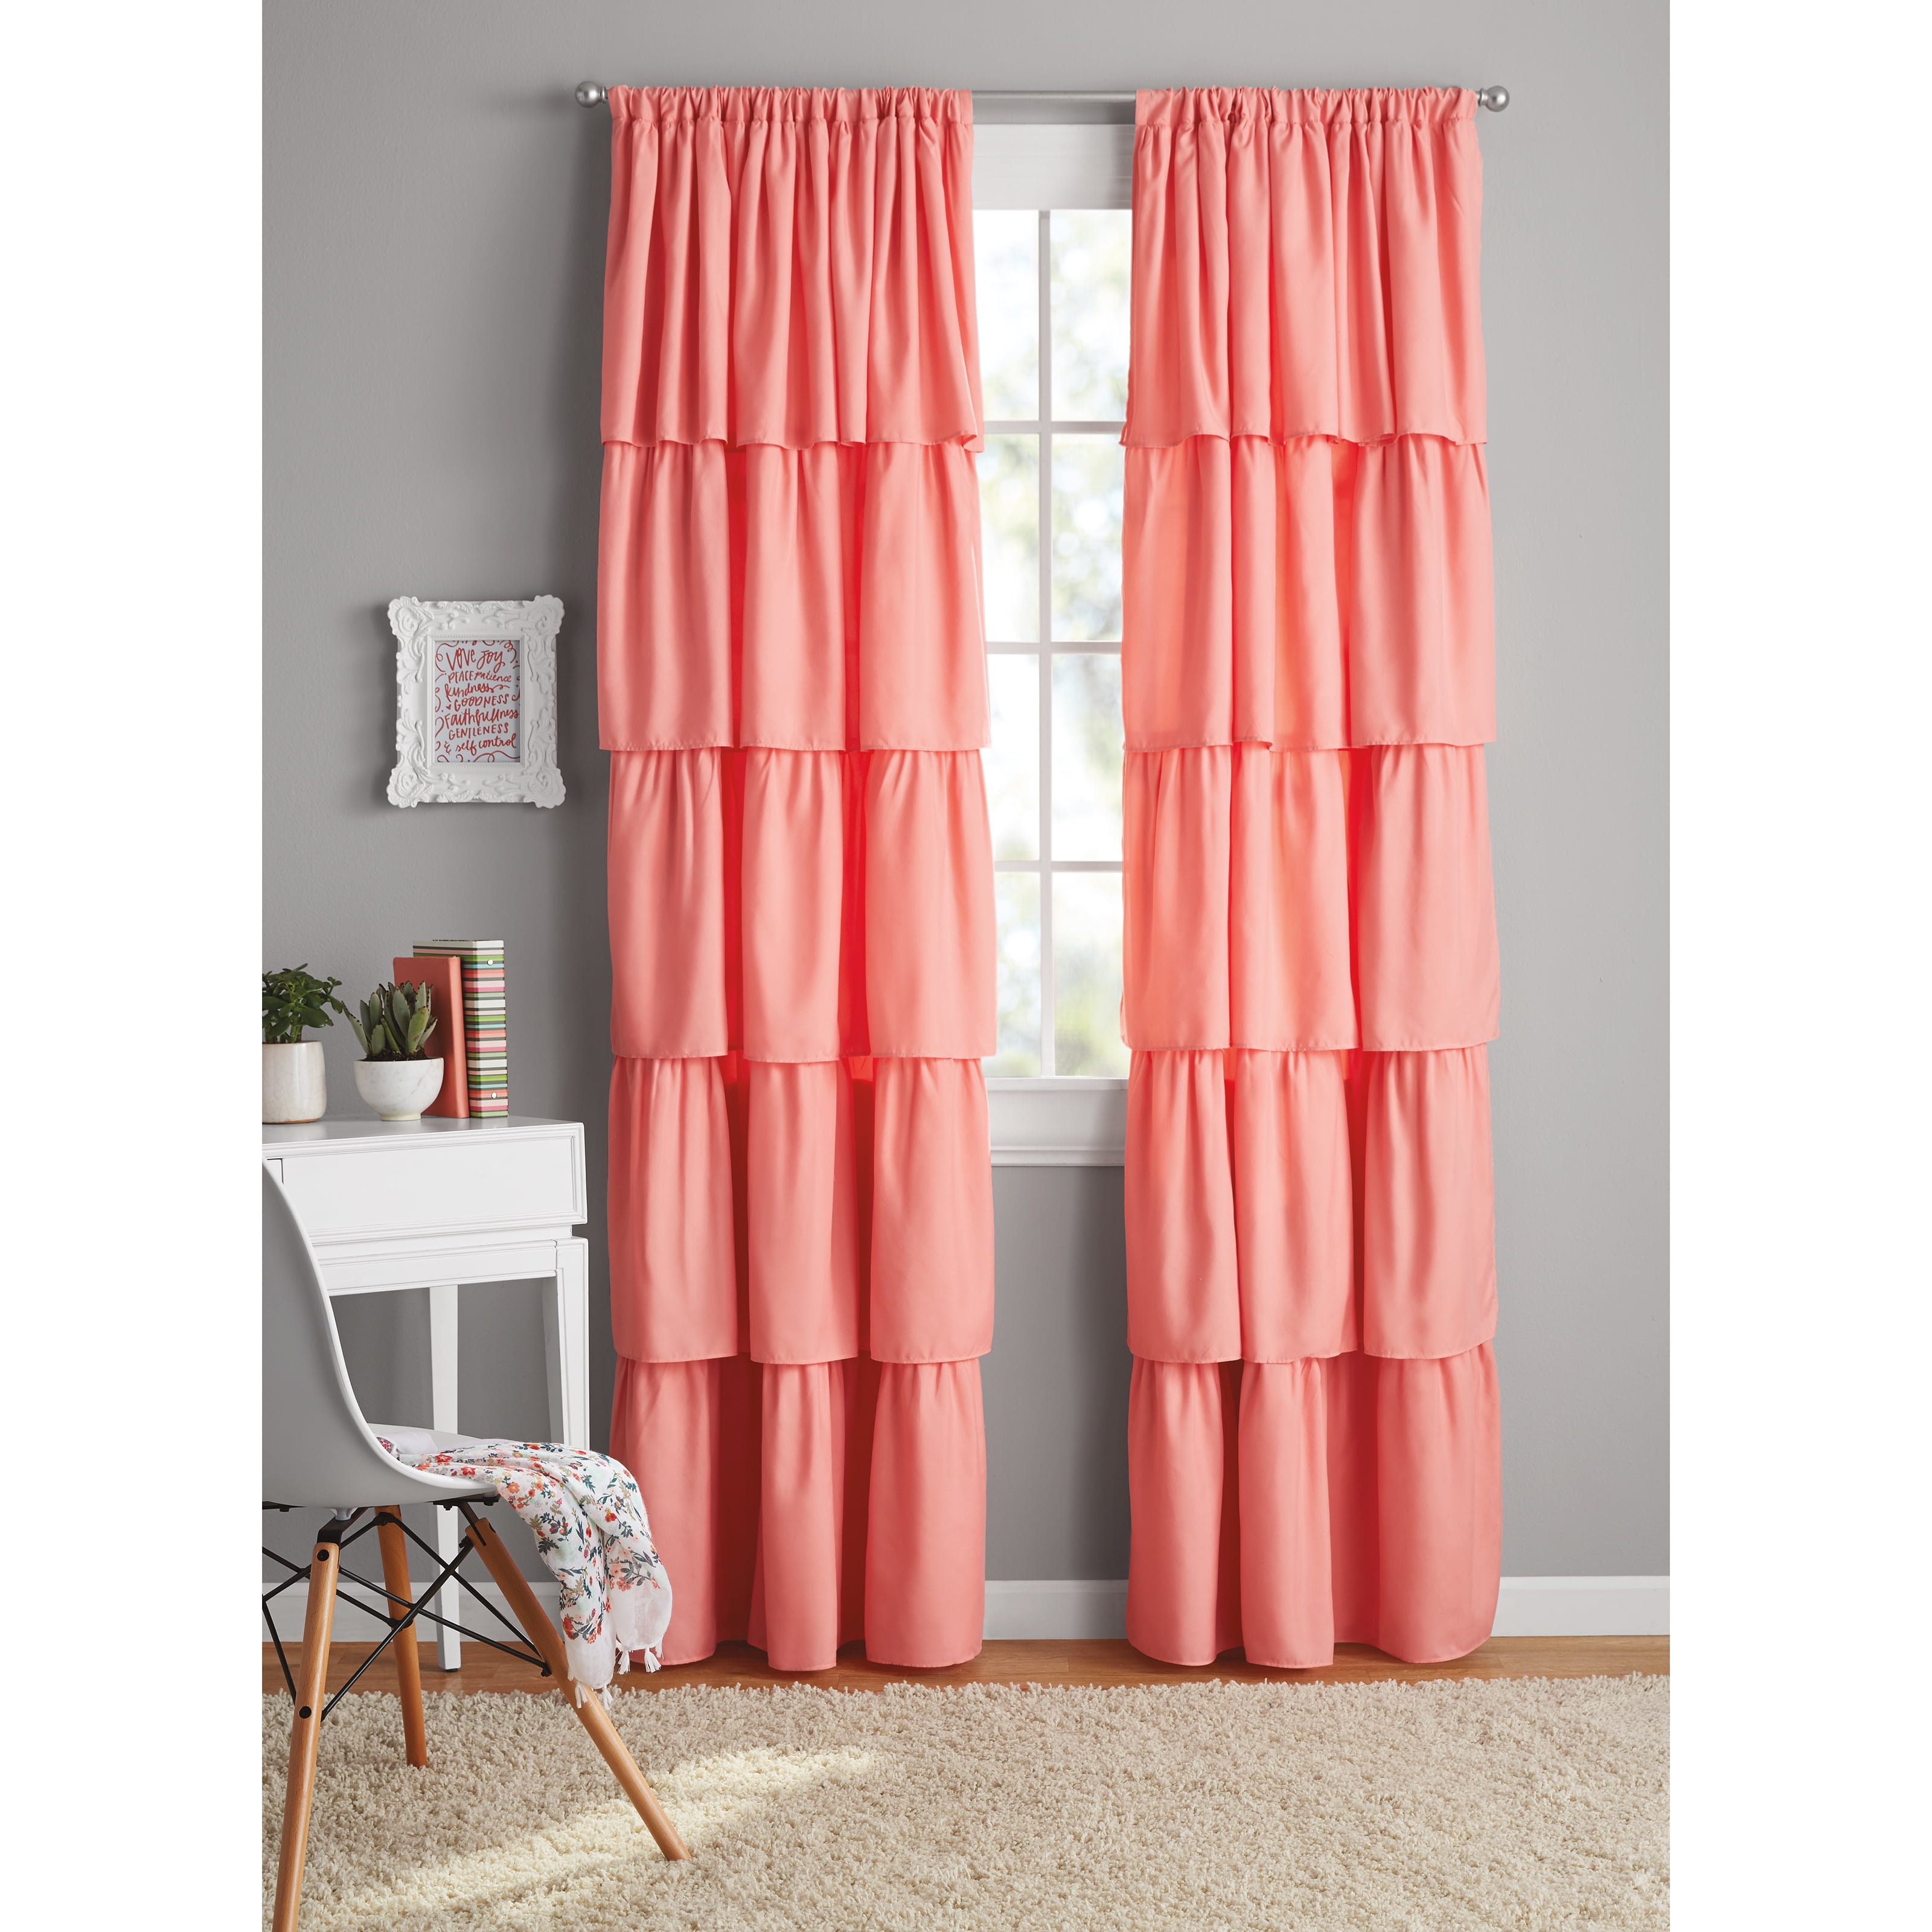 Your Zone Ruffle Girls Bedroom Single Curtain Panel, 42